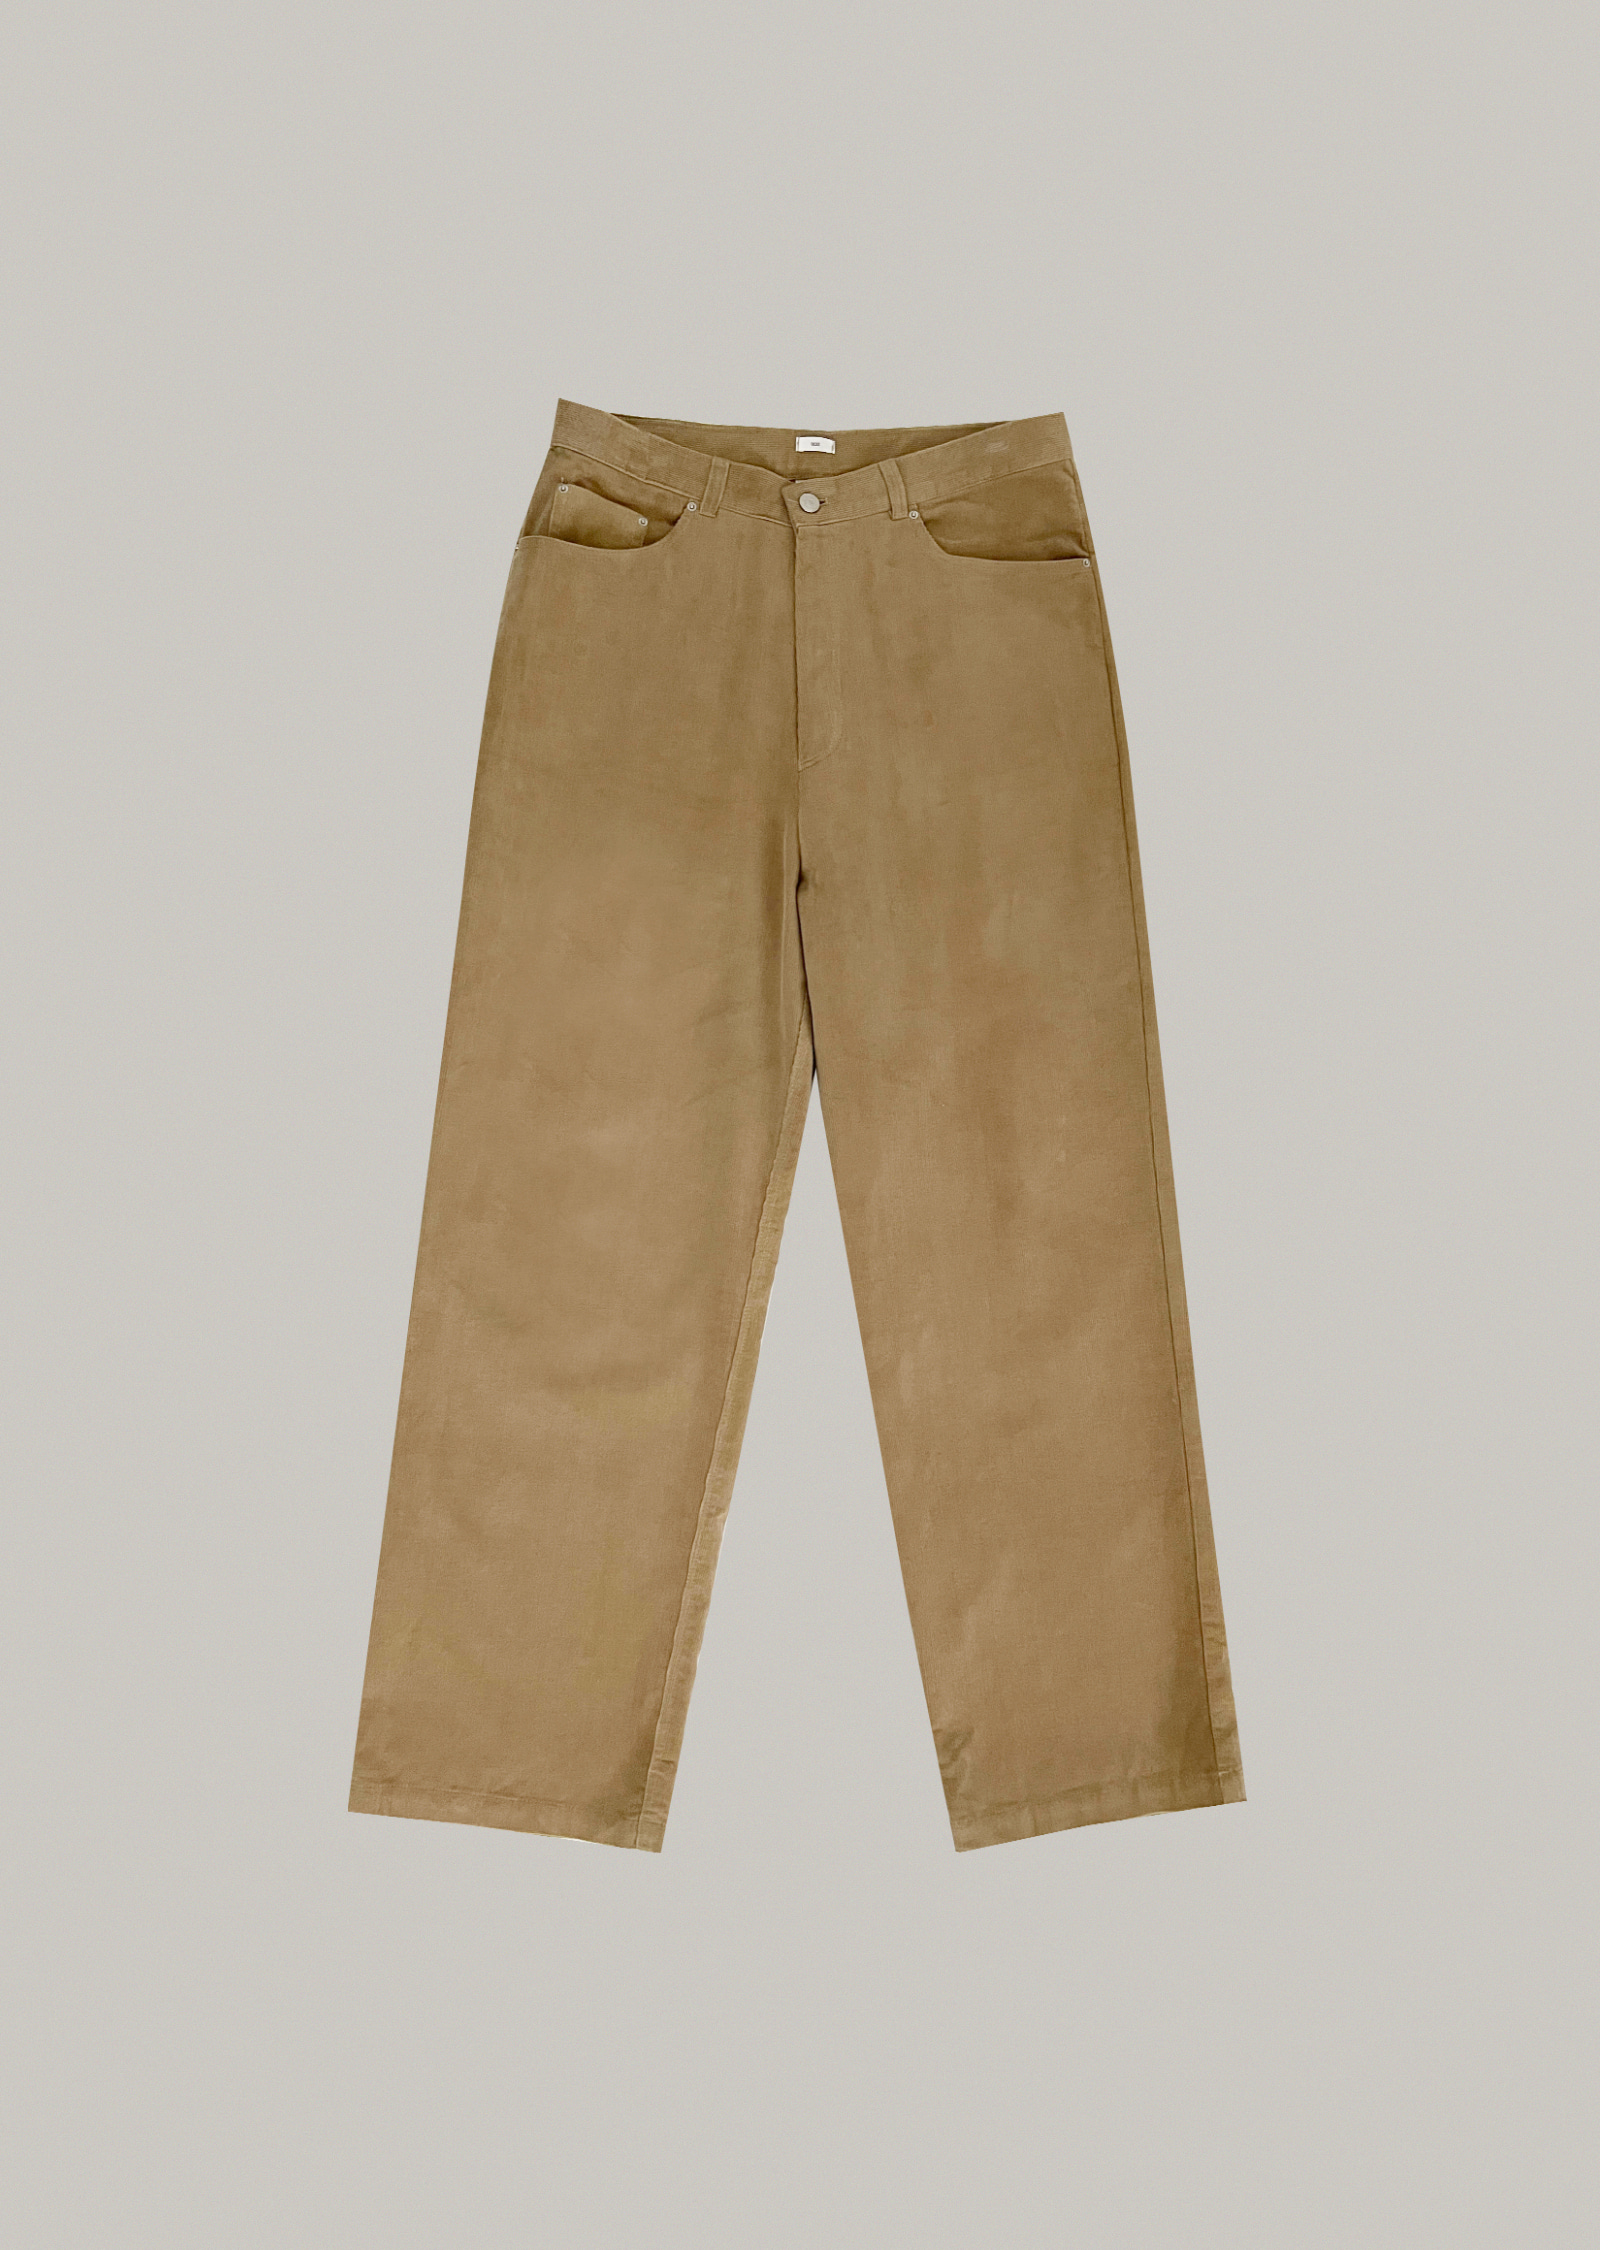 wide corduroy pants (beige)